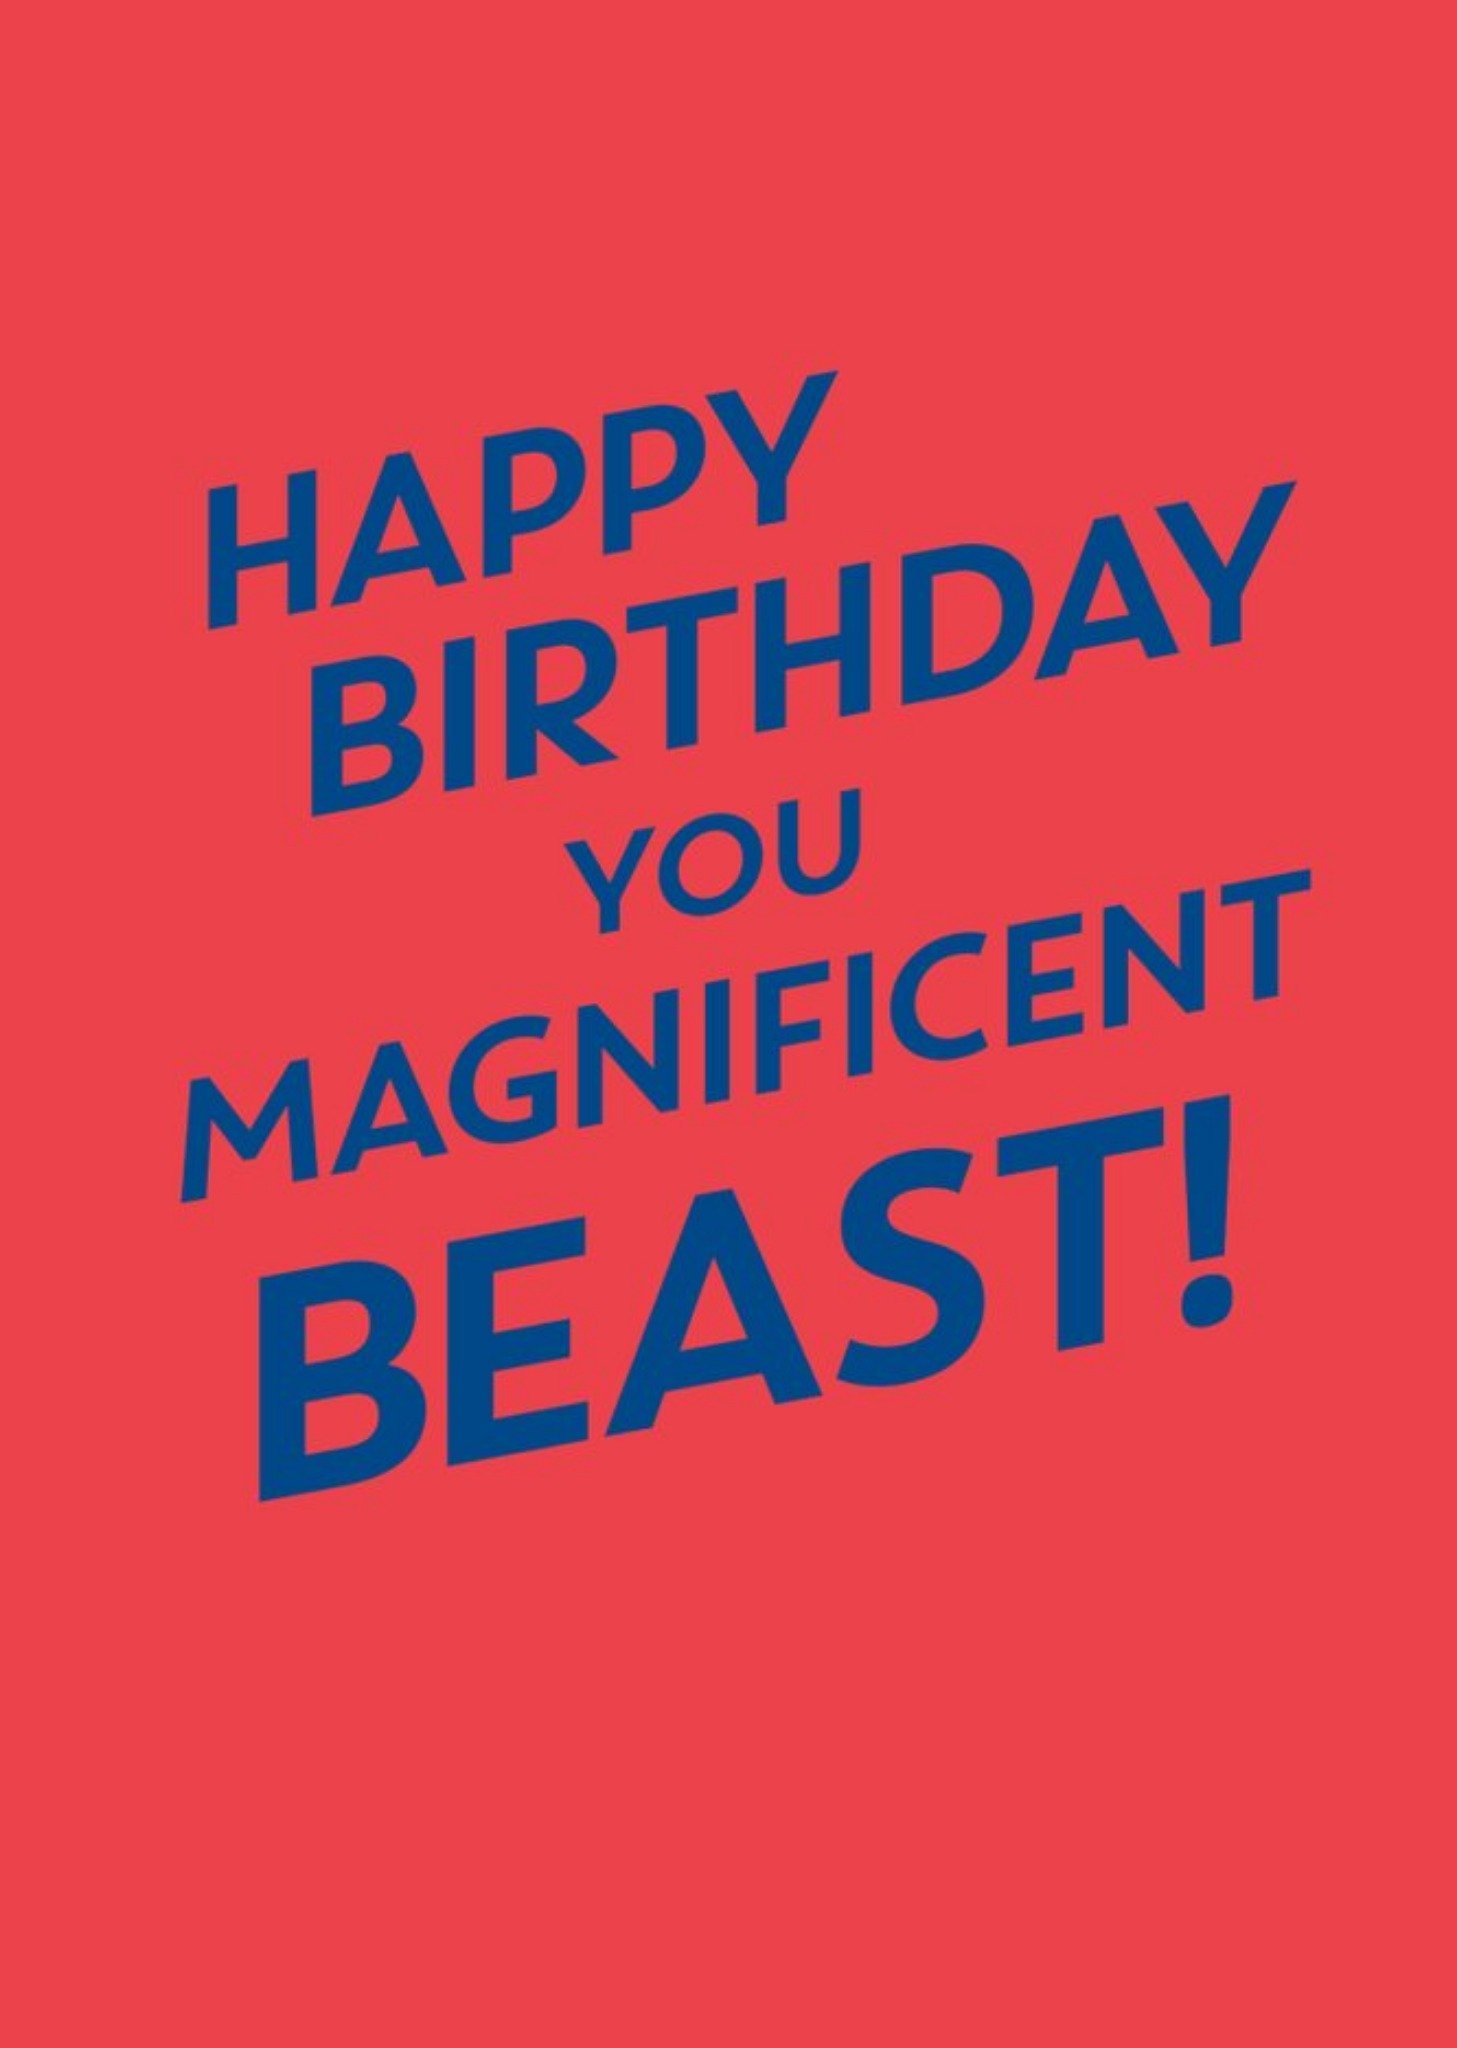 Moonpig Magnigicent Beast Birthday Card, Large